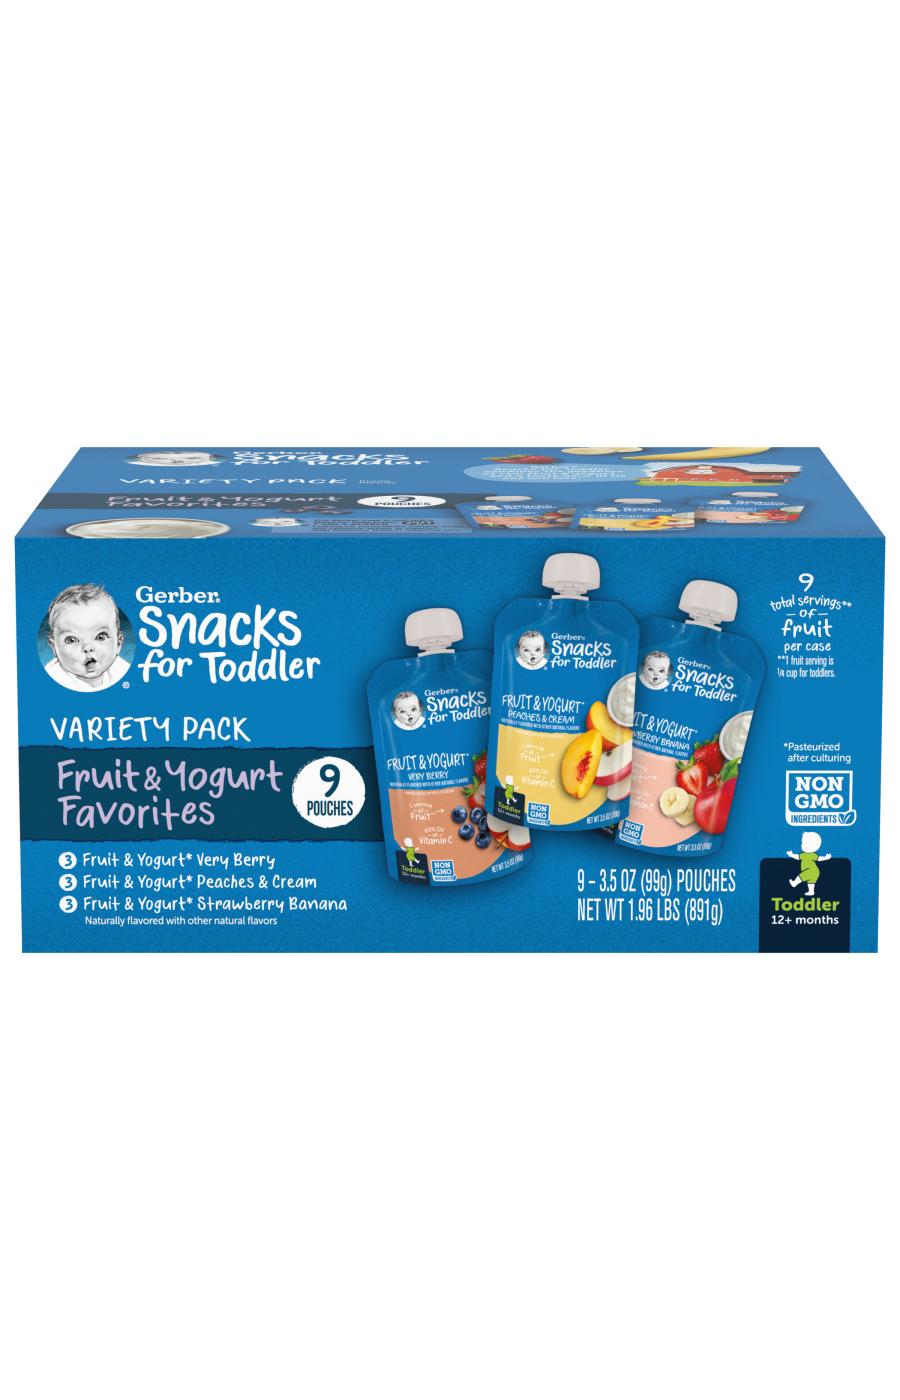 Gerber Snacks for Toddler Pouches Variety Pack - Fruit & Yogurt Favorites; image 1 of 8